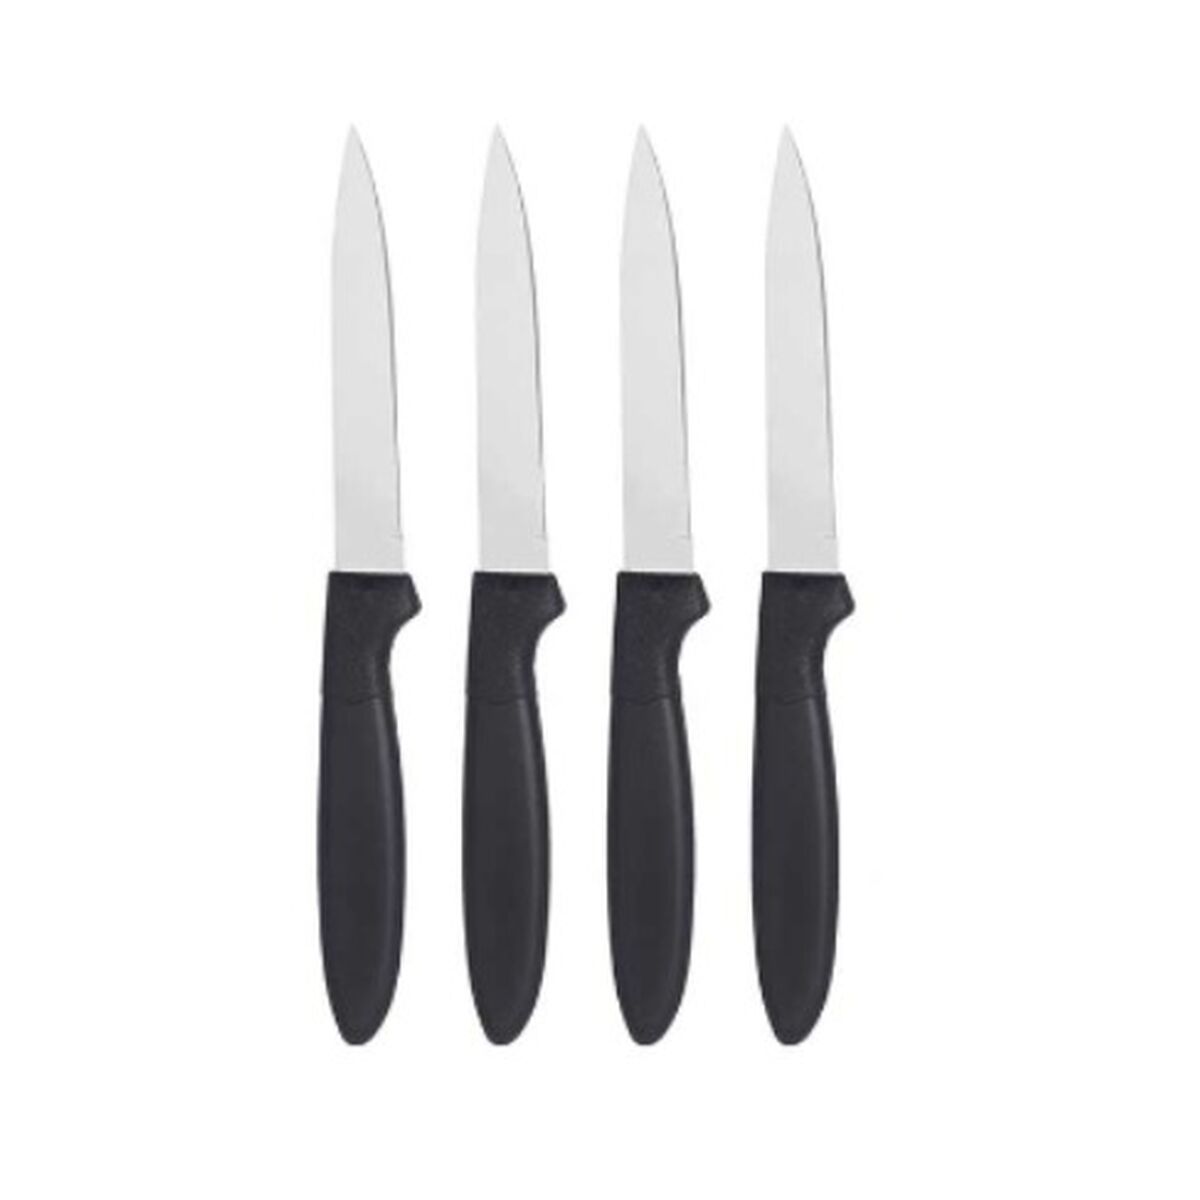 Knife set black silver - 12 pieces